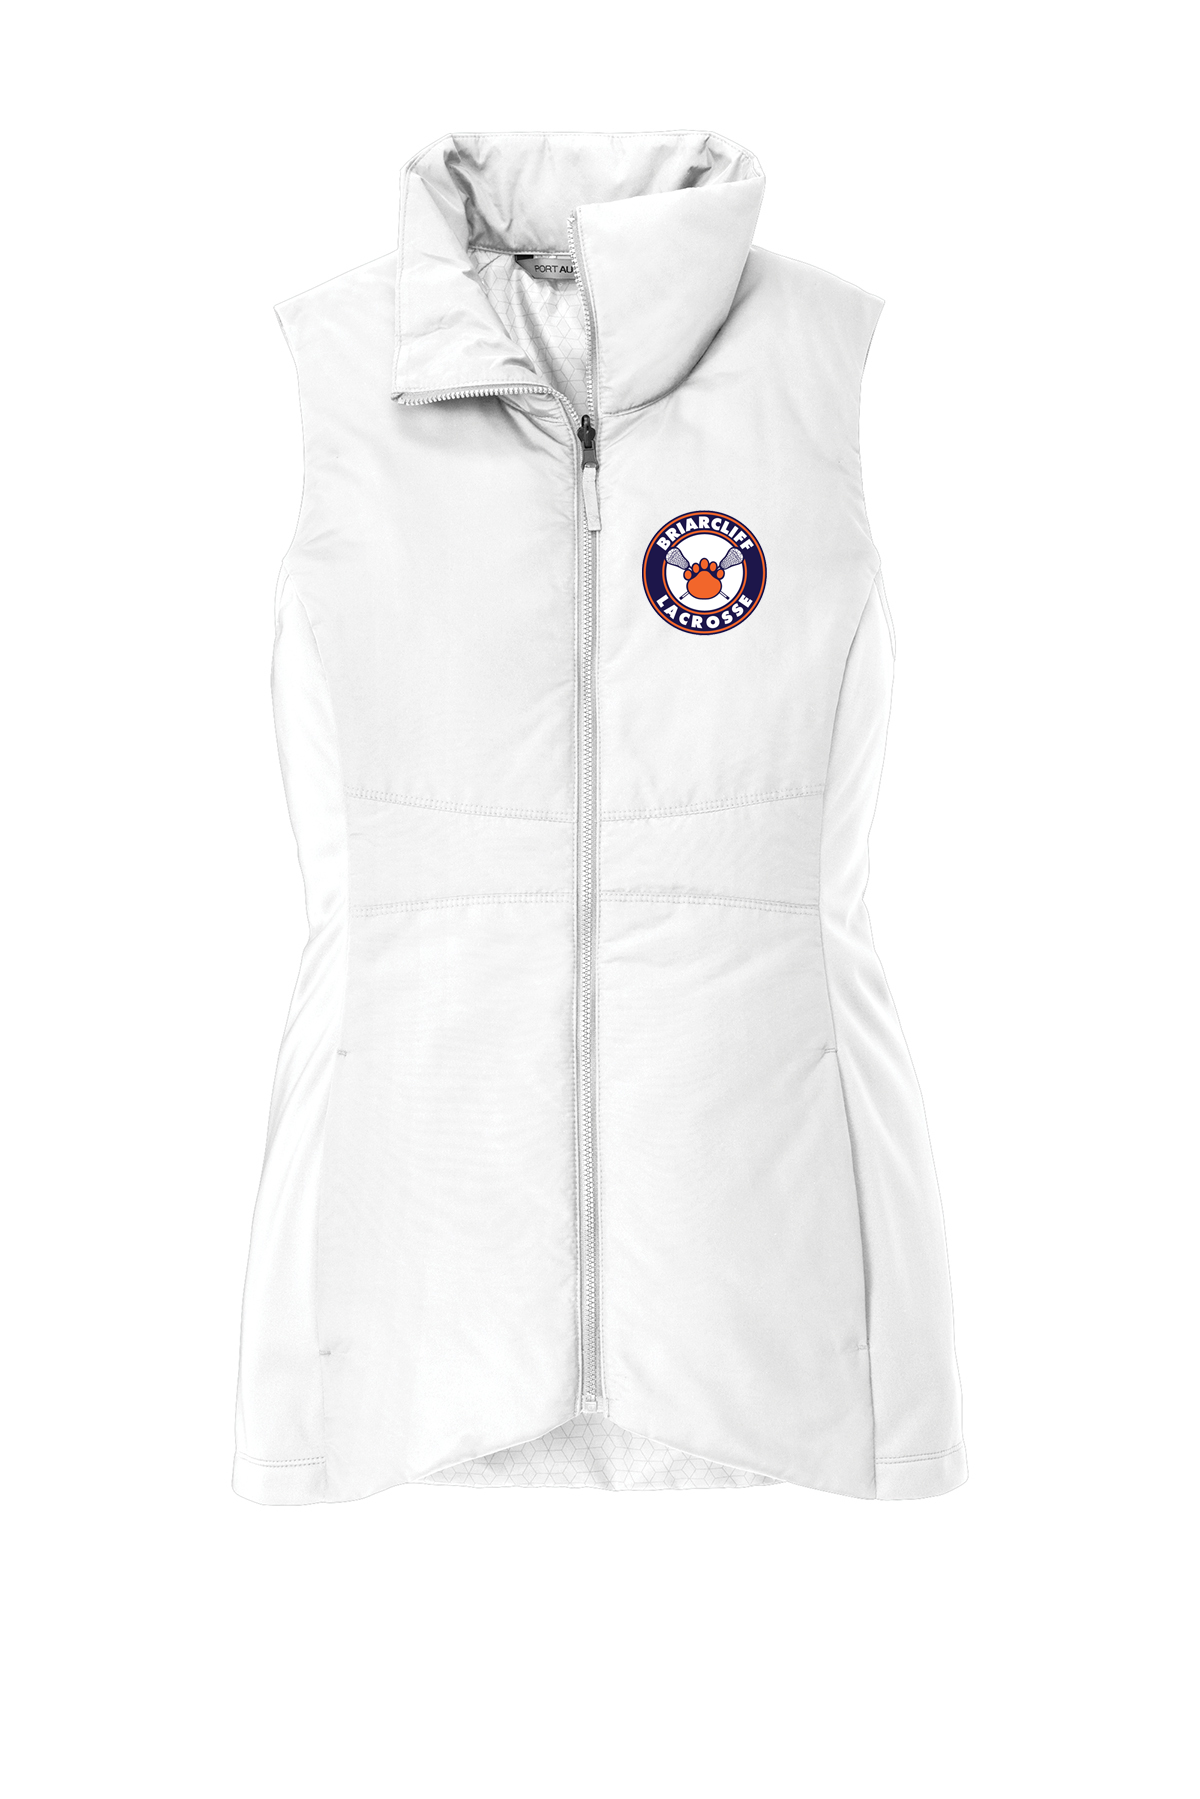 Briarcliff Lacrosse Women's White Vest